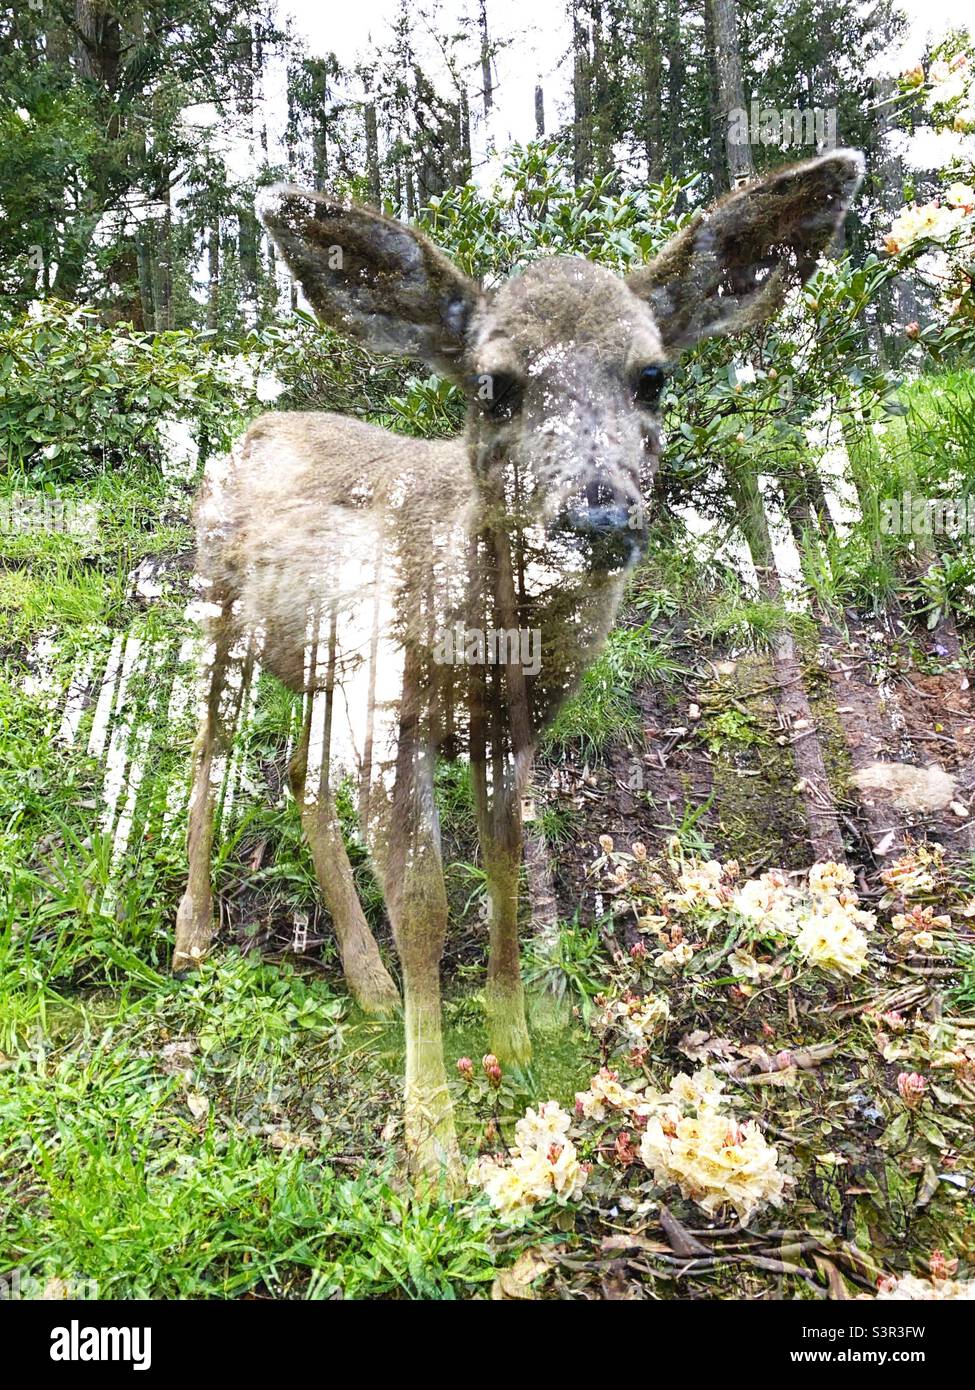 Deer in forest double exposure. Stock Photo